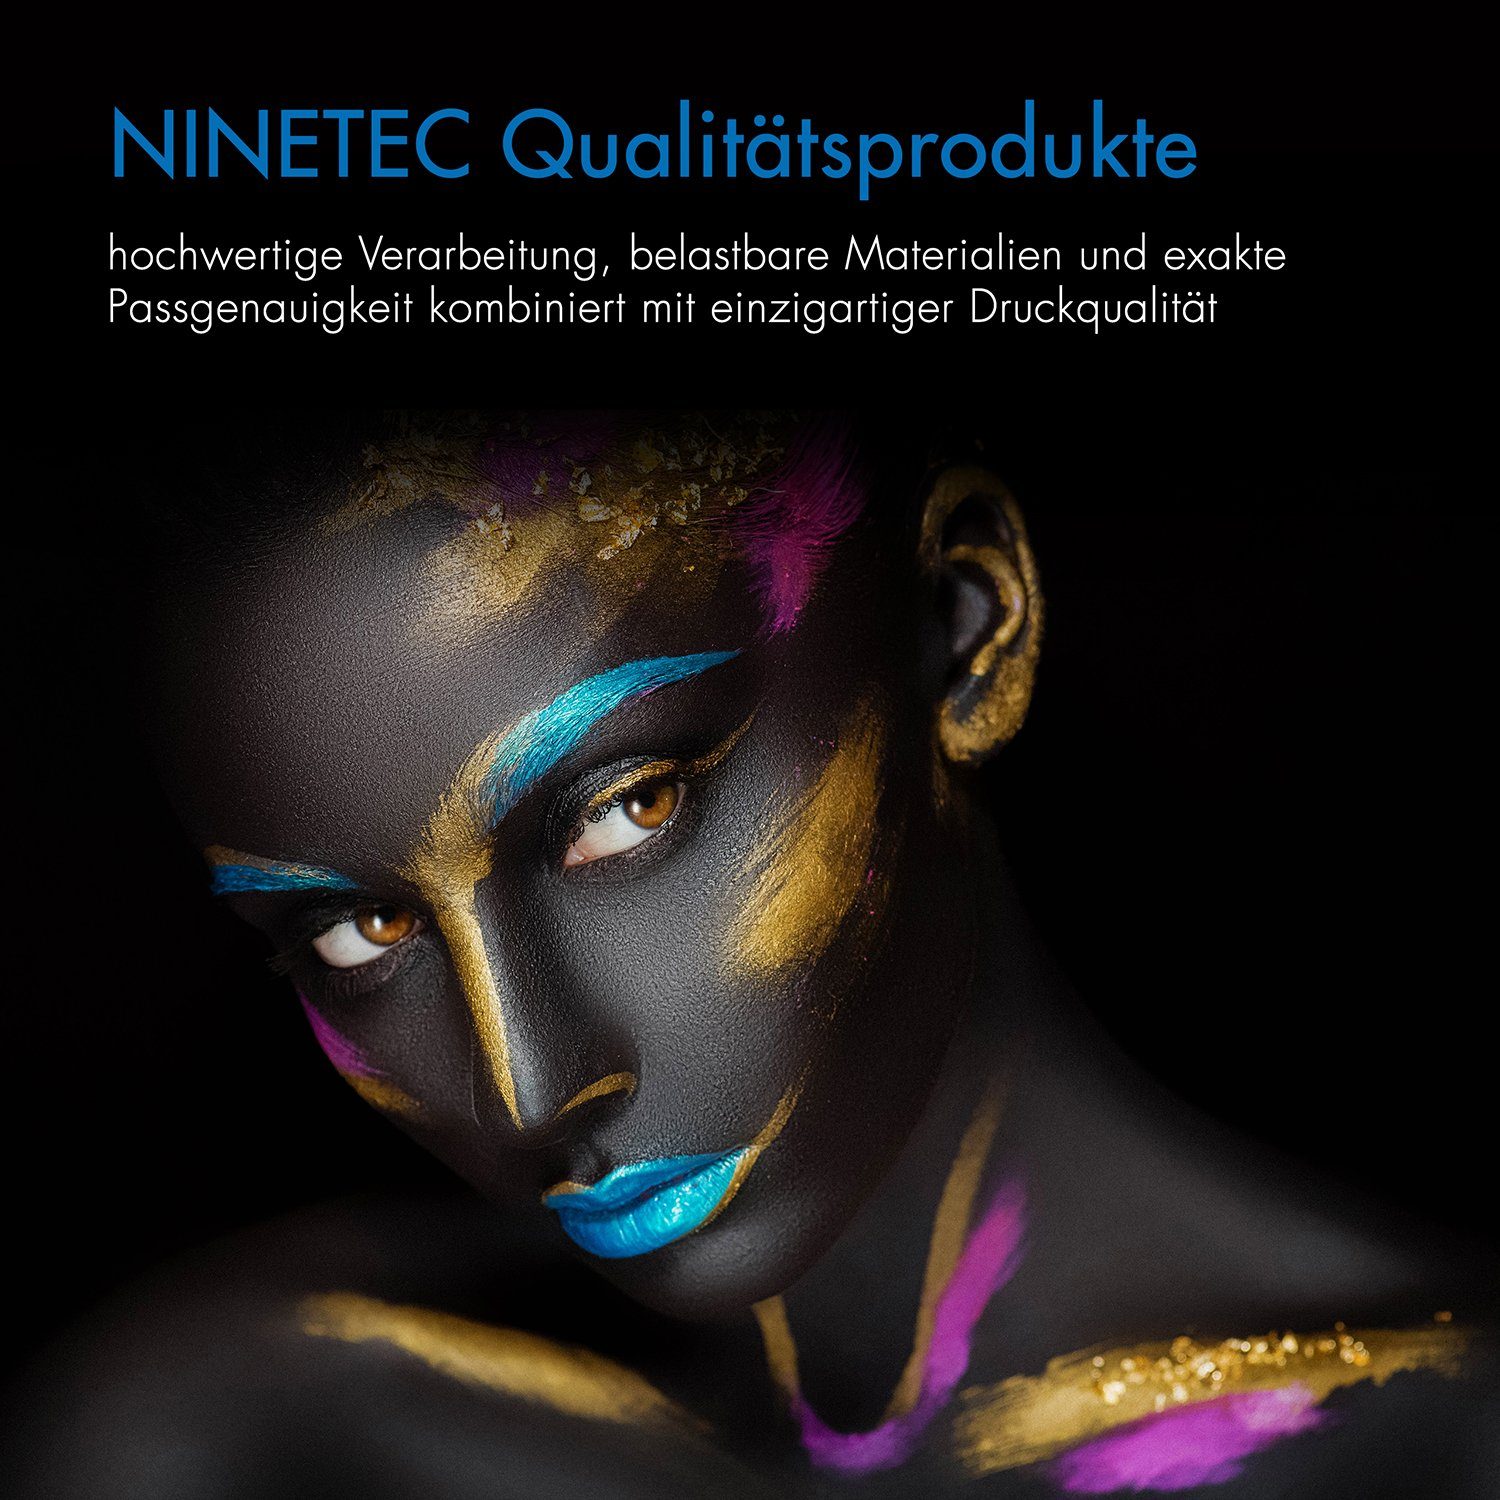 Tintenpatrone NINETEC ersetzt Magenta 971XL HP 971 XL